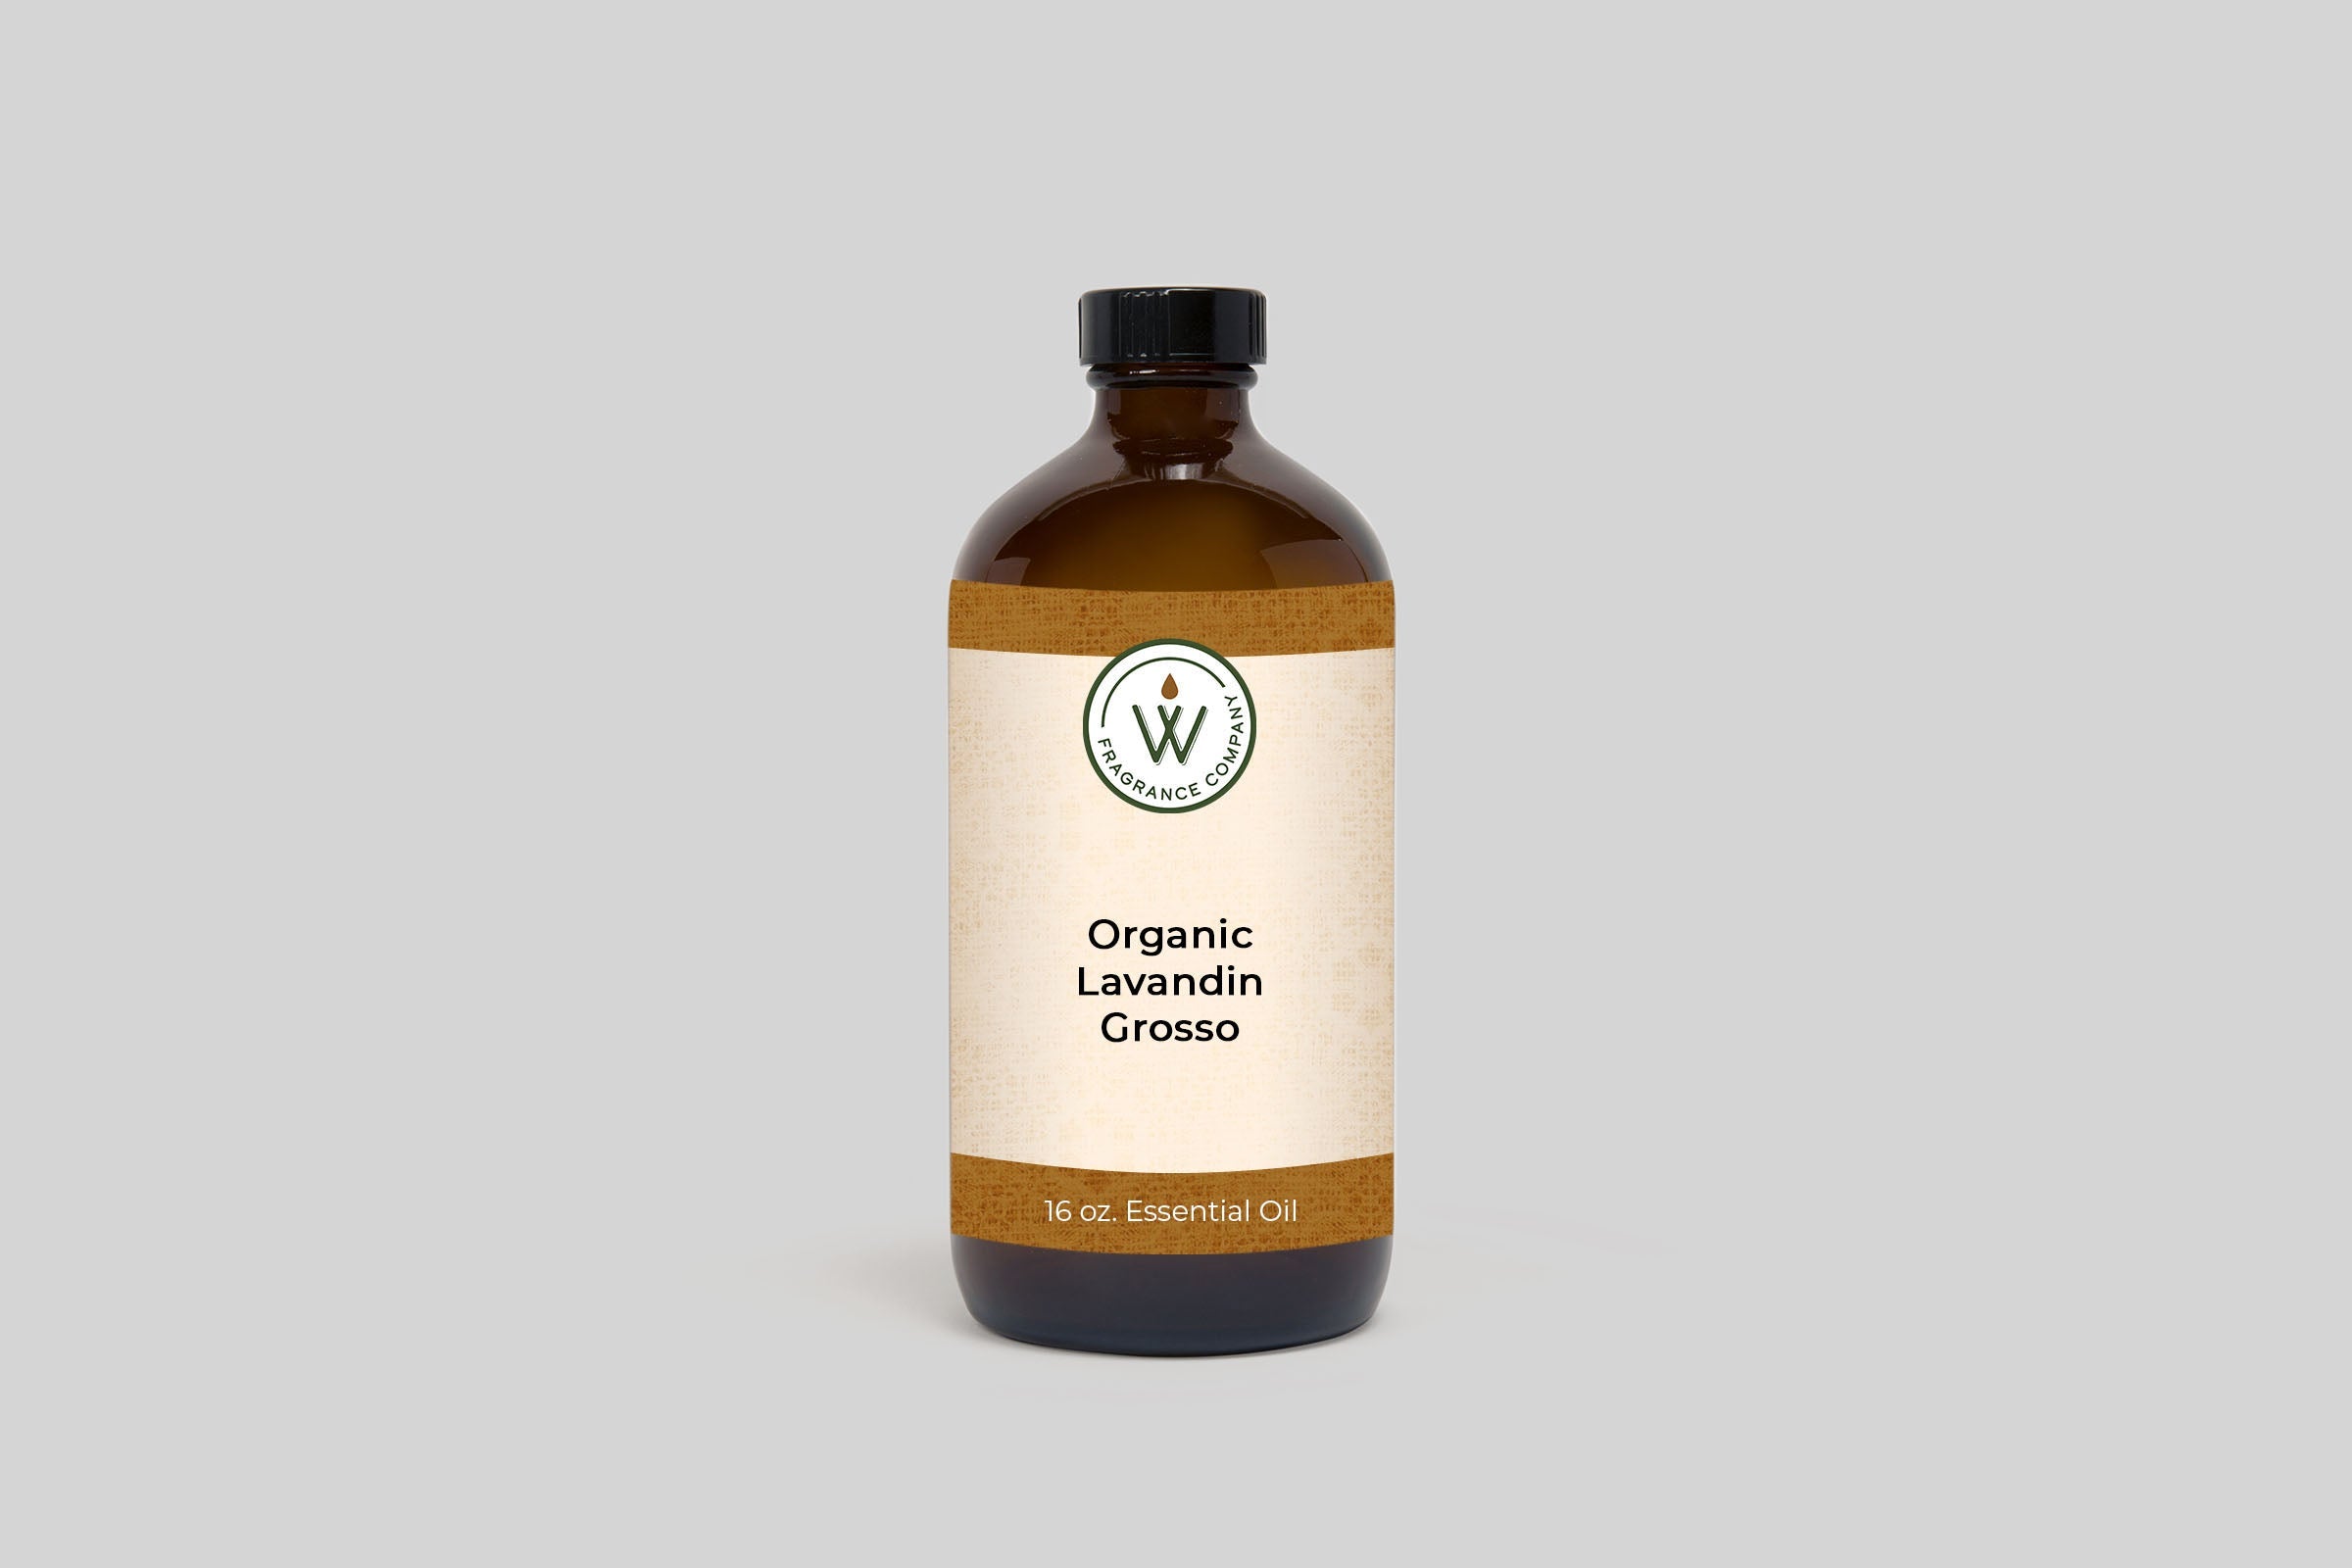 Organic Lavandin Grosso Essential Oil